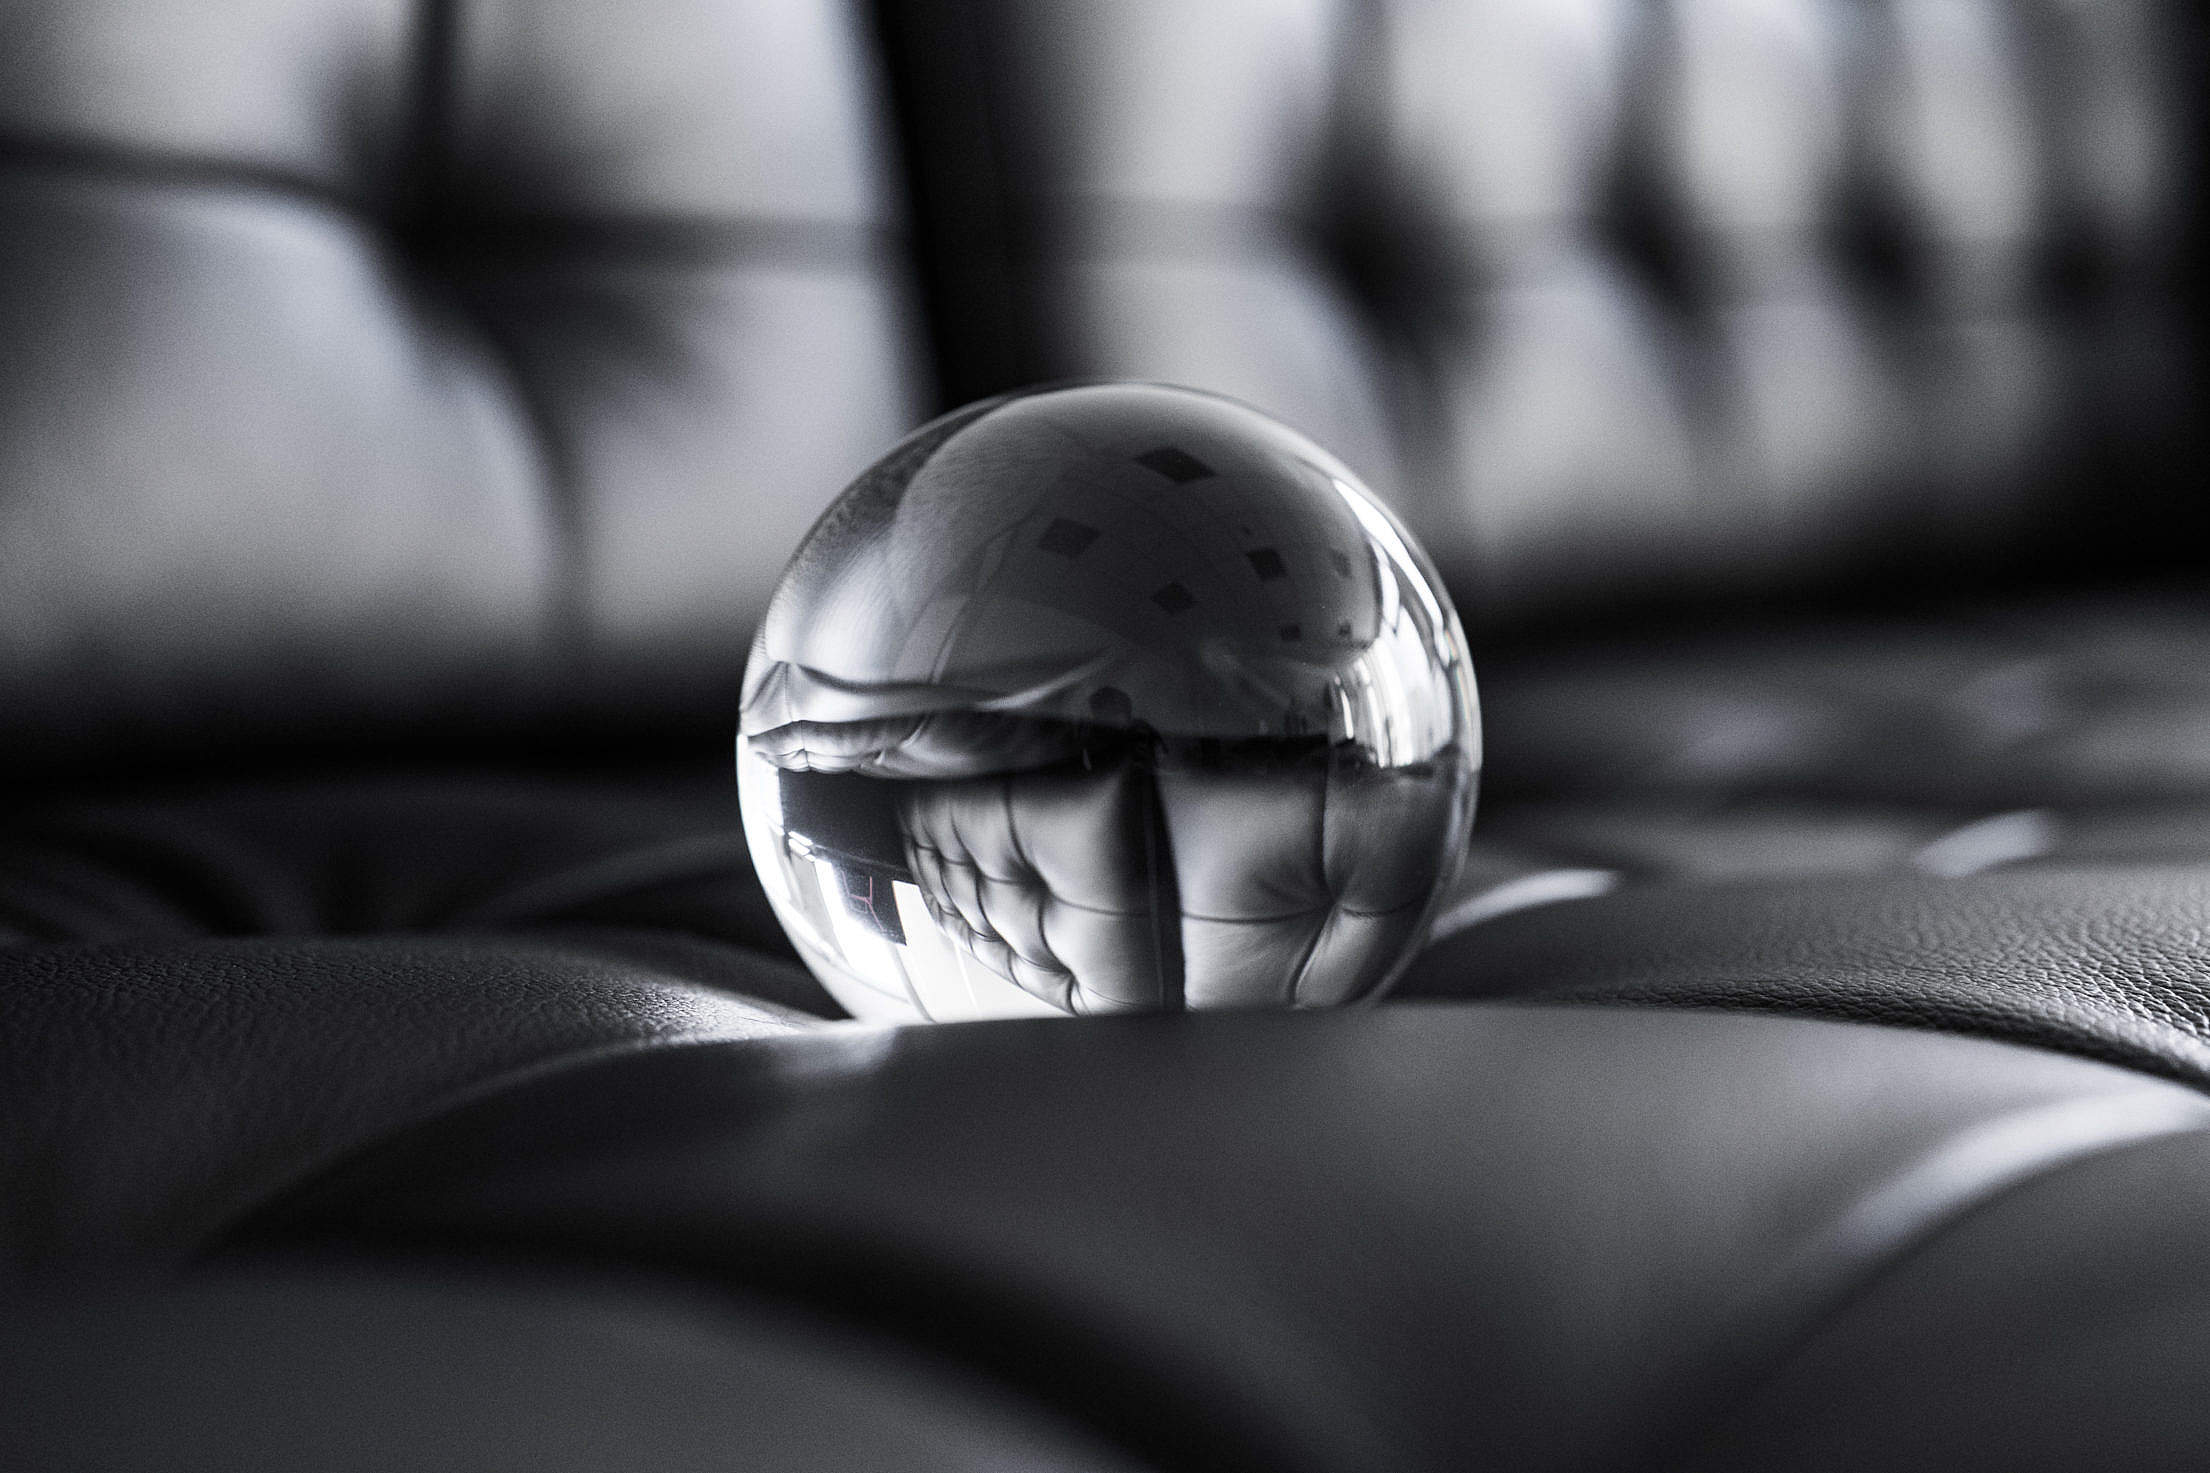 Big Glass Crystal Ball on Black Leather Sofa Free Stock Photo